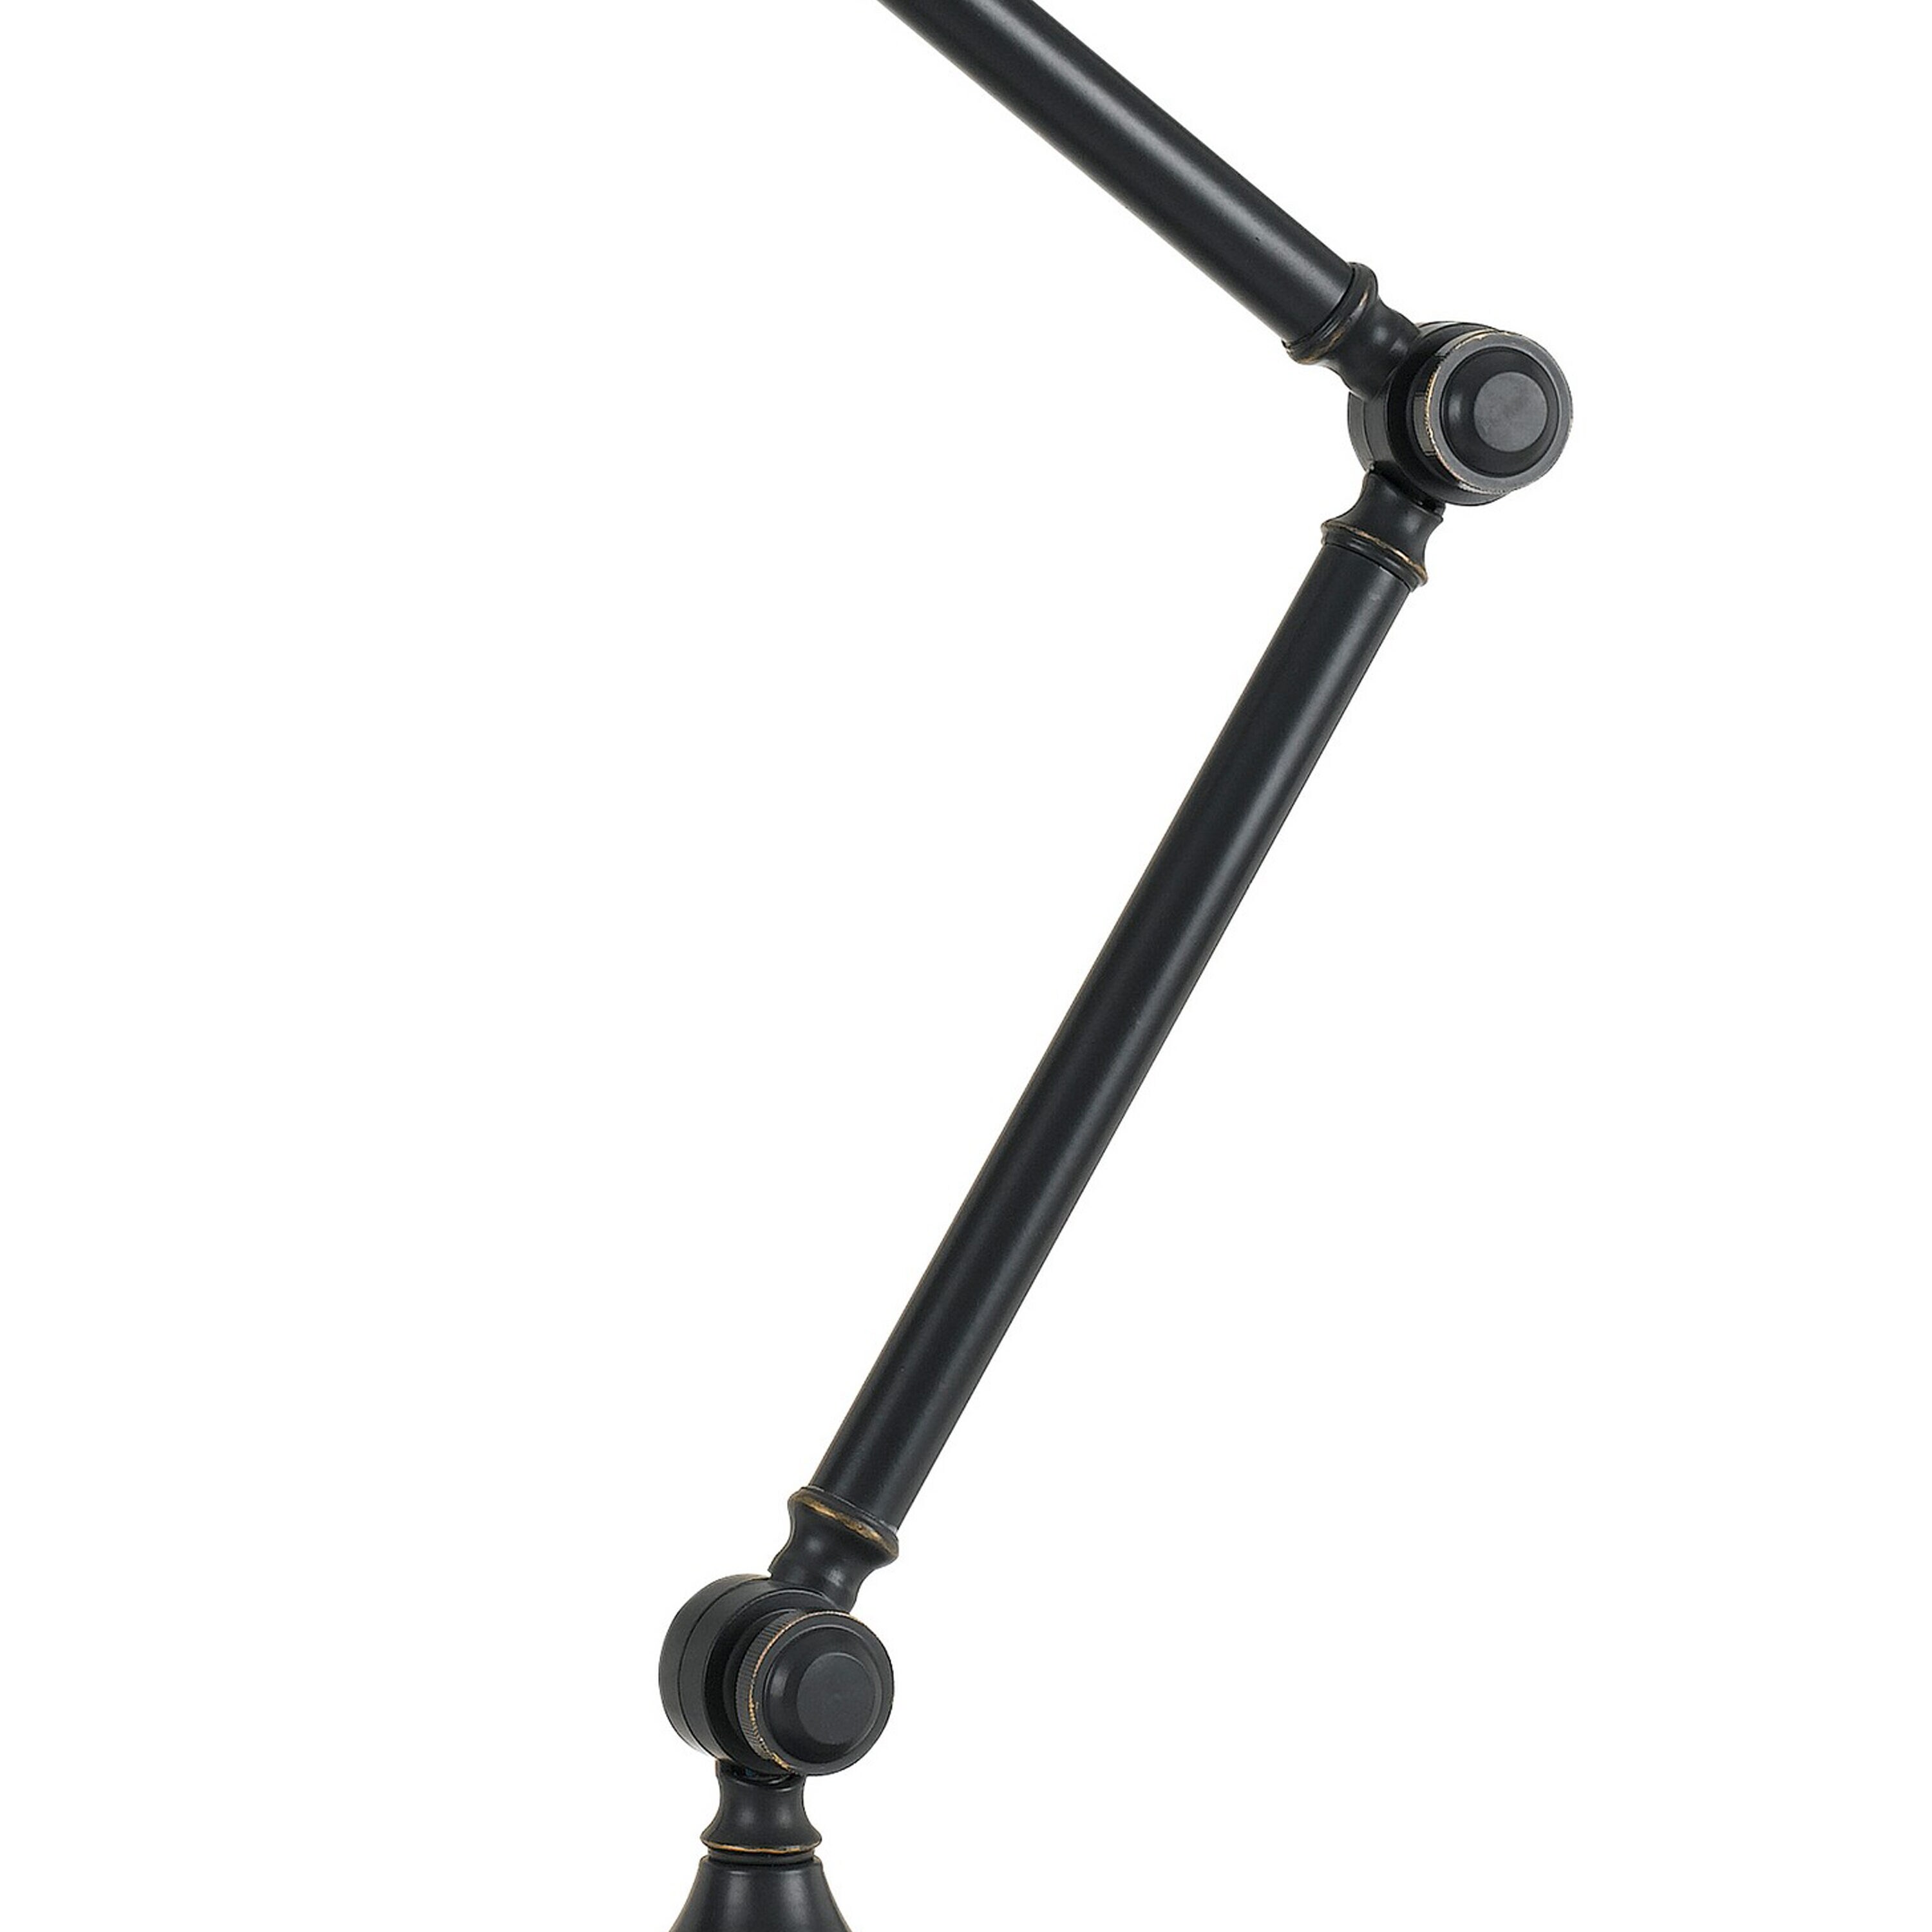 Merra 25 in. Black Adjustable Desk Lamp with Fabric Shade PTL-2904